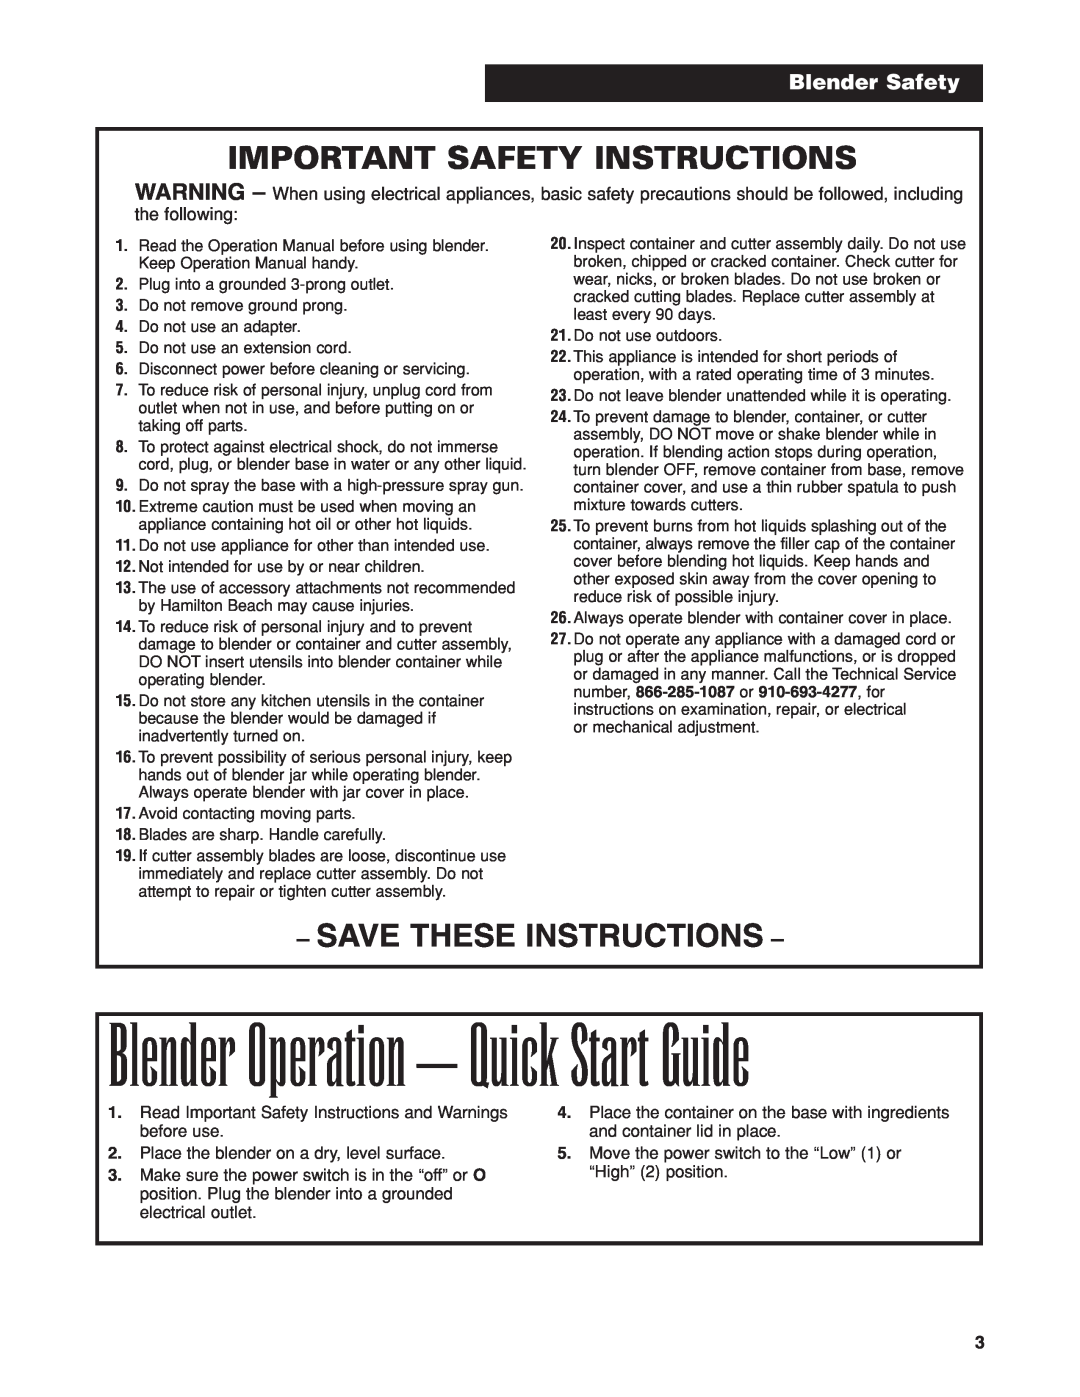 Hamilton Beach HBB908 manuel dutilisation Important Safety Instructions, Save These Instructions, Blender Safety 